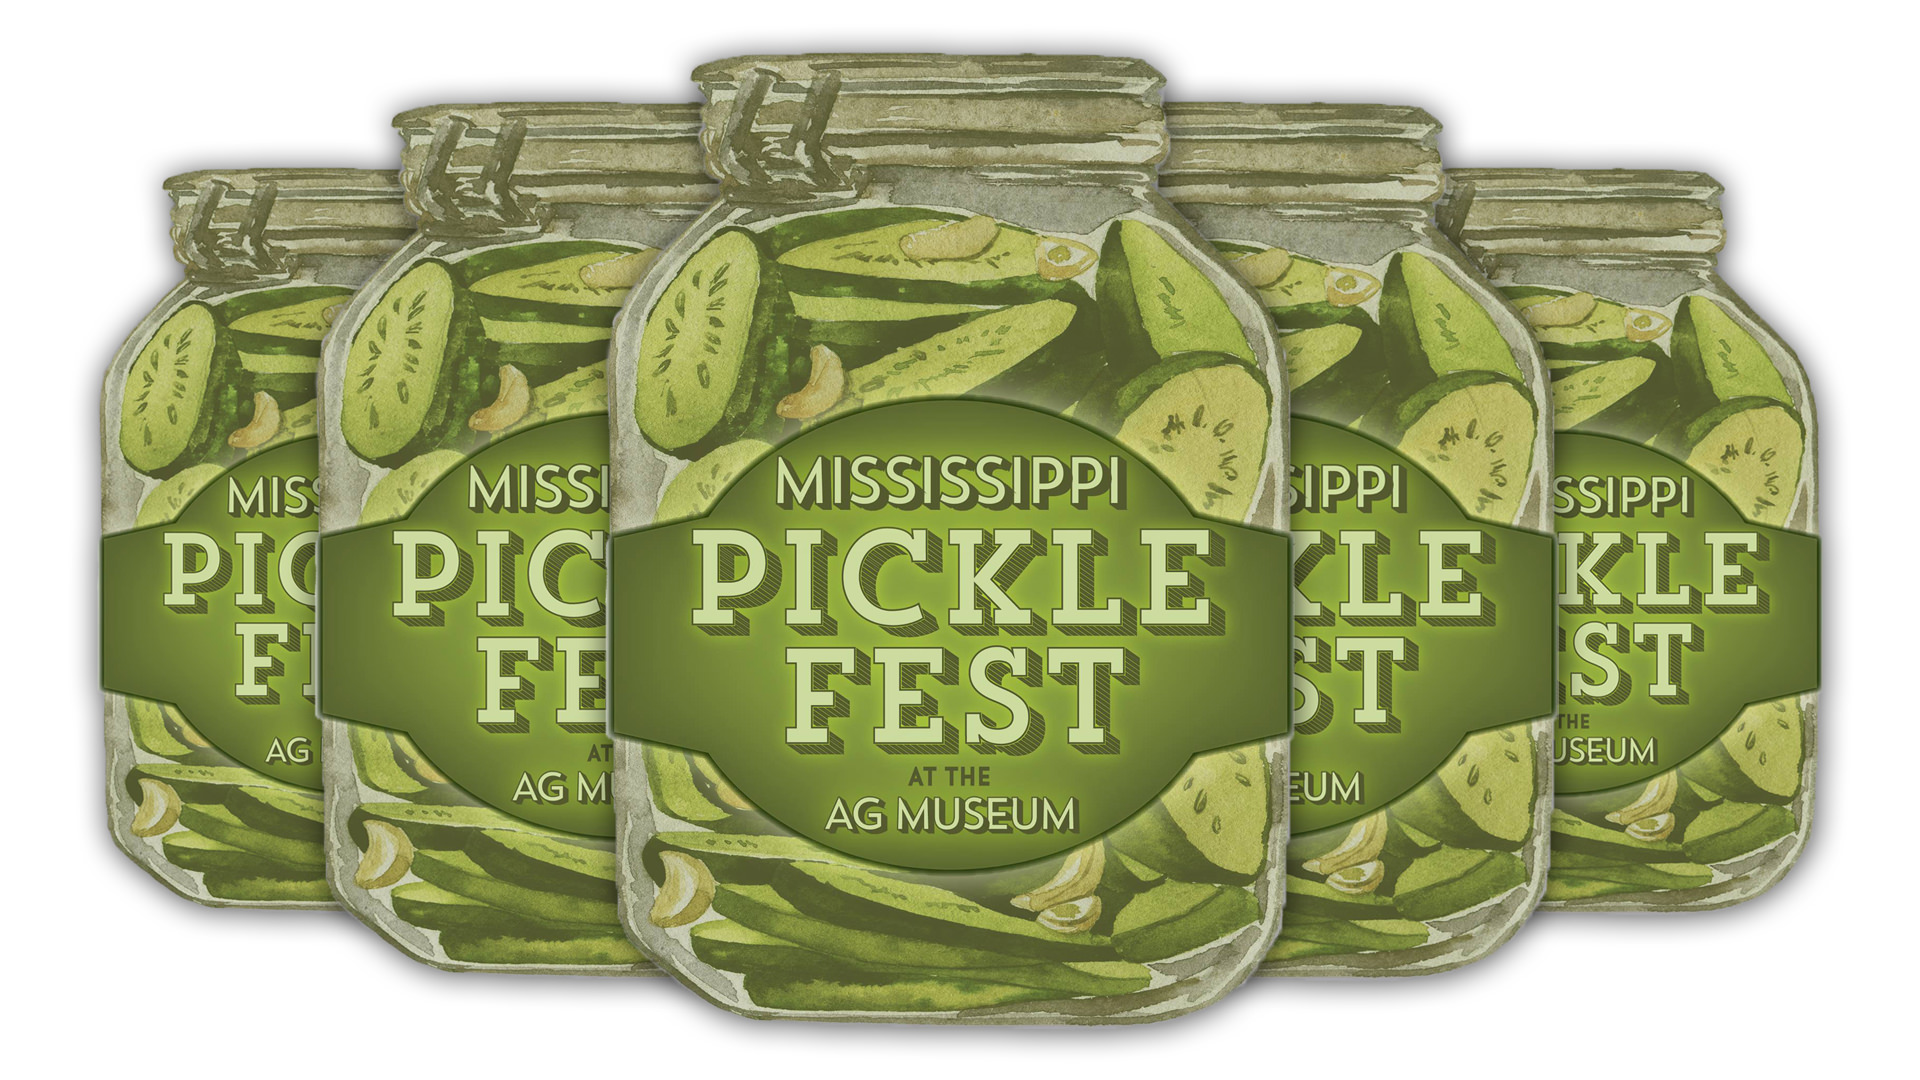 MS Pickle Fest